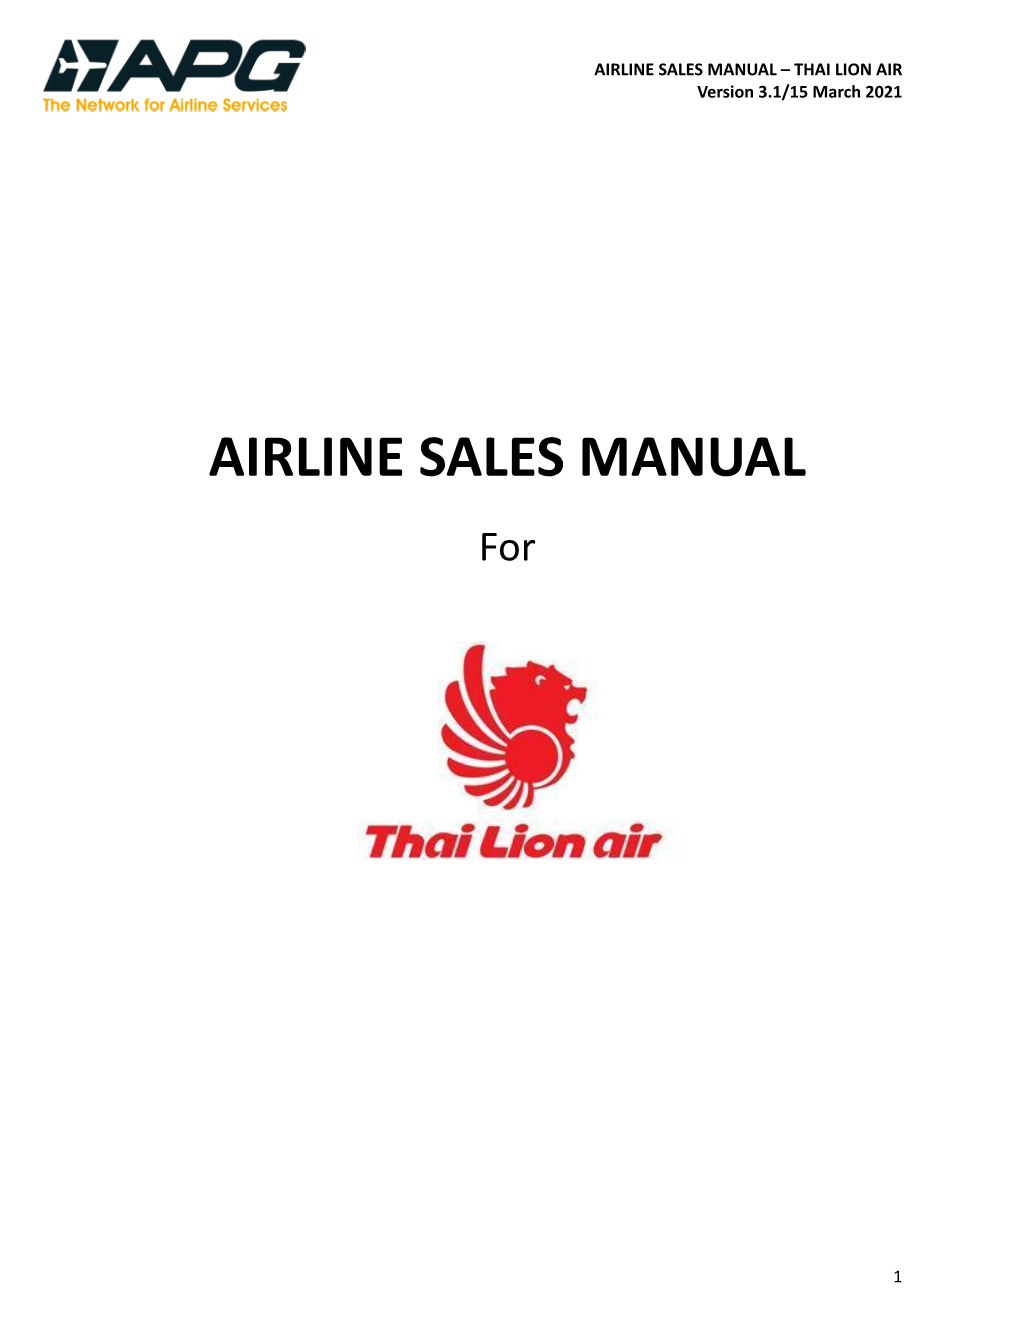 AIRLINE-Sales-Manual-SL-V3.1 As-At-19 May 2021.Docx